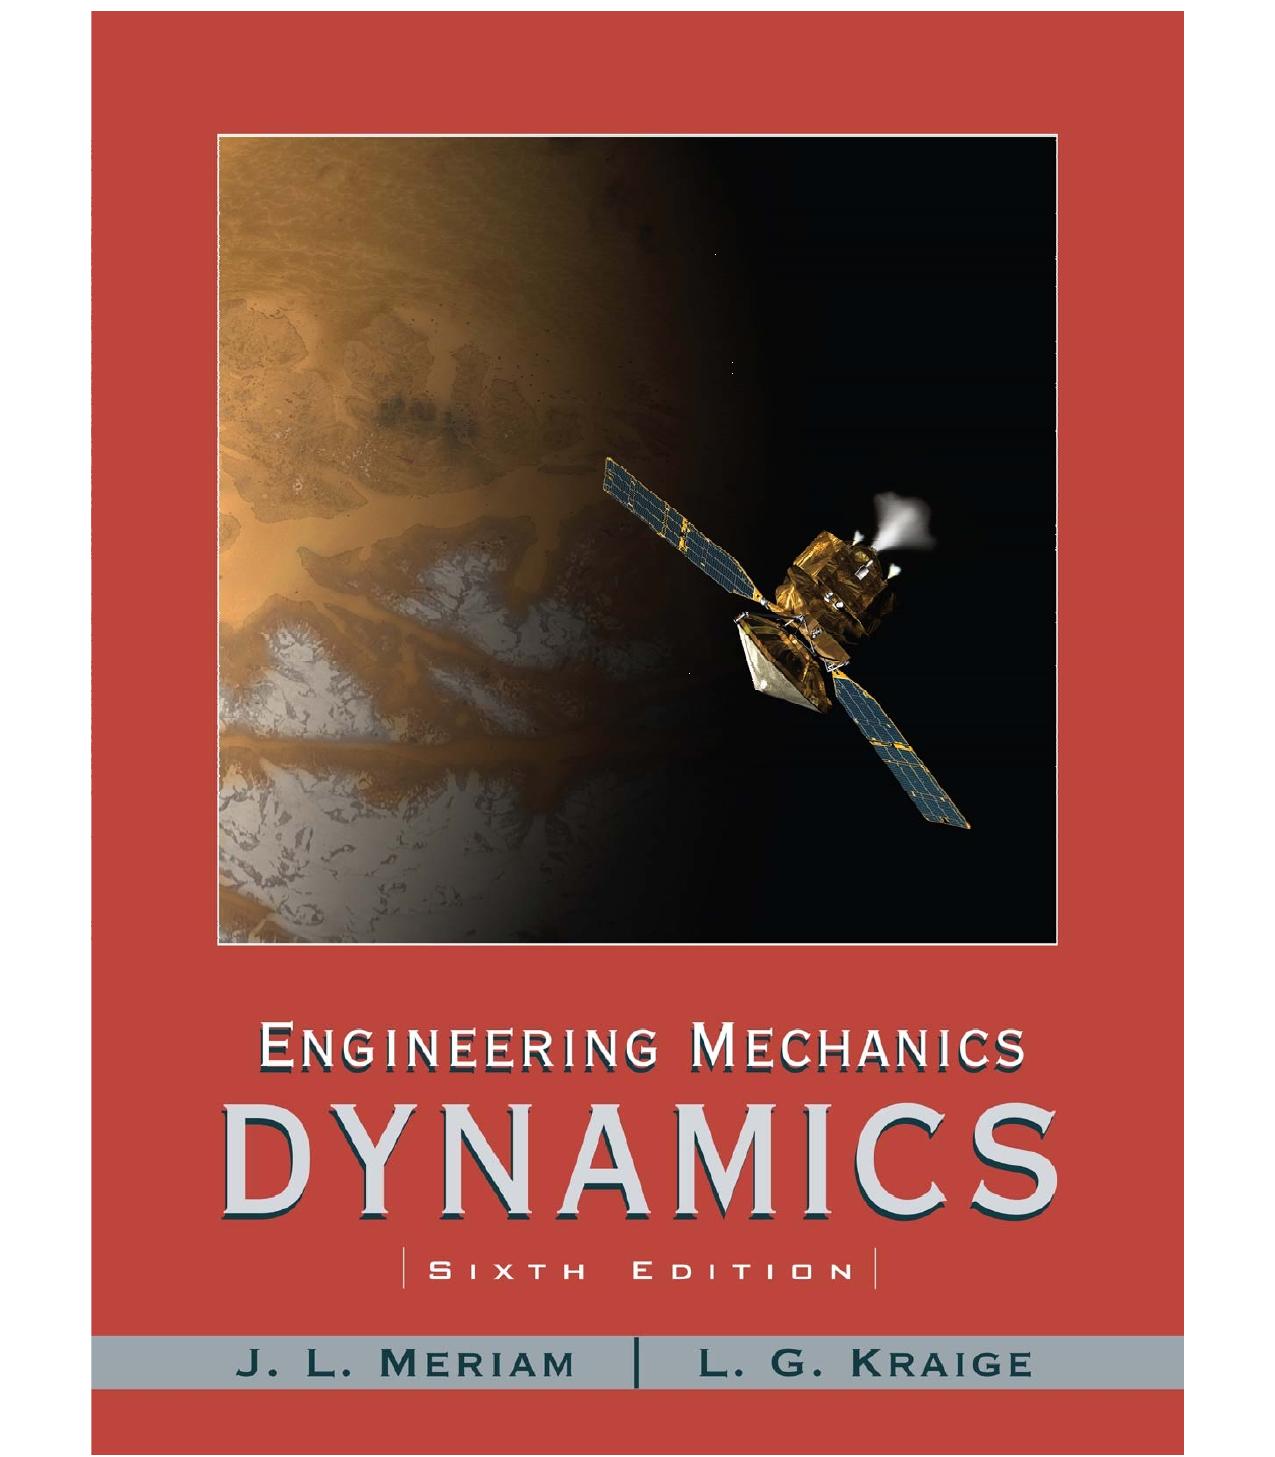 Engineering Mechanics Dynamics by J L Meriam & L G Kraige 6th Edition